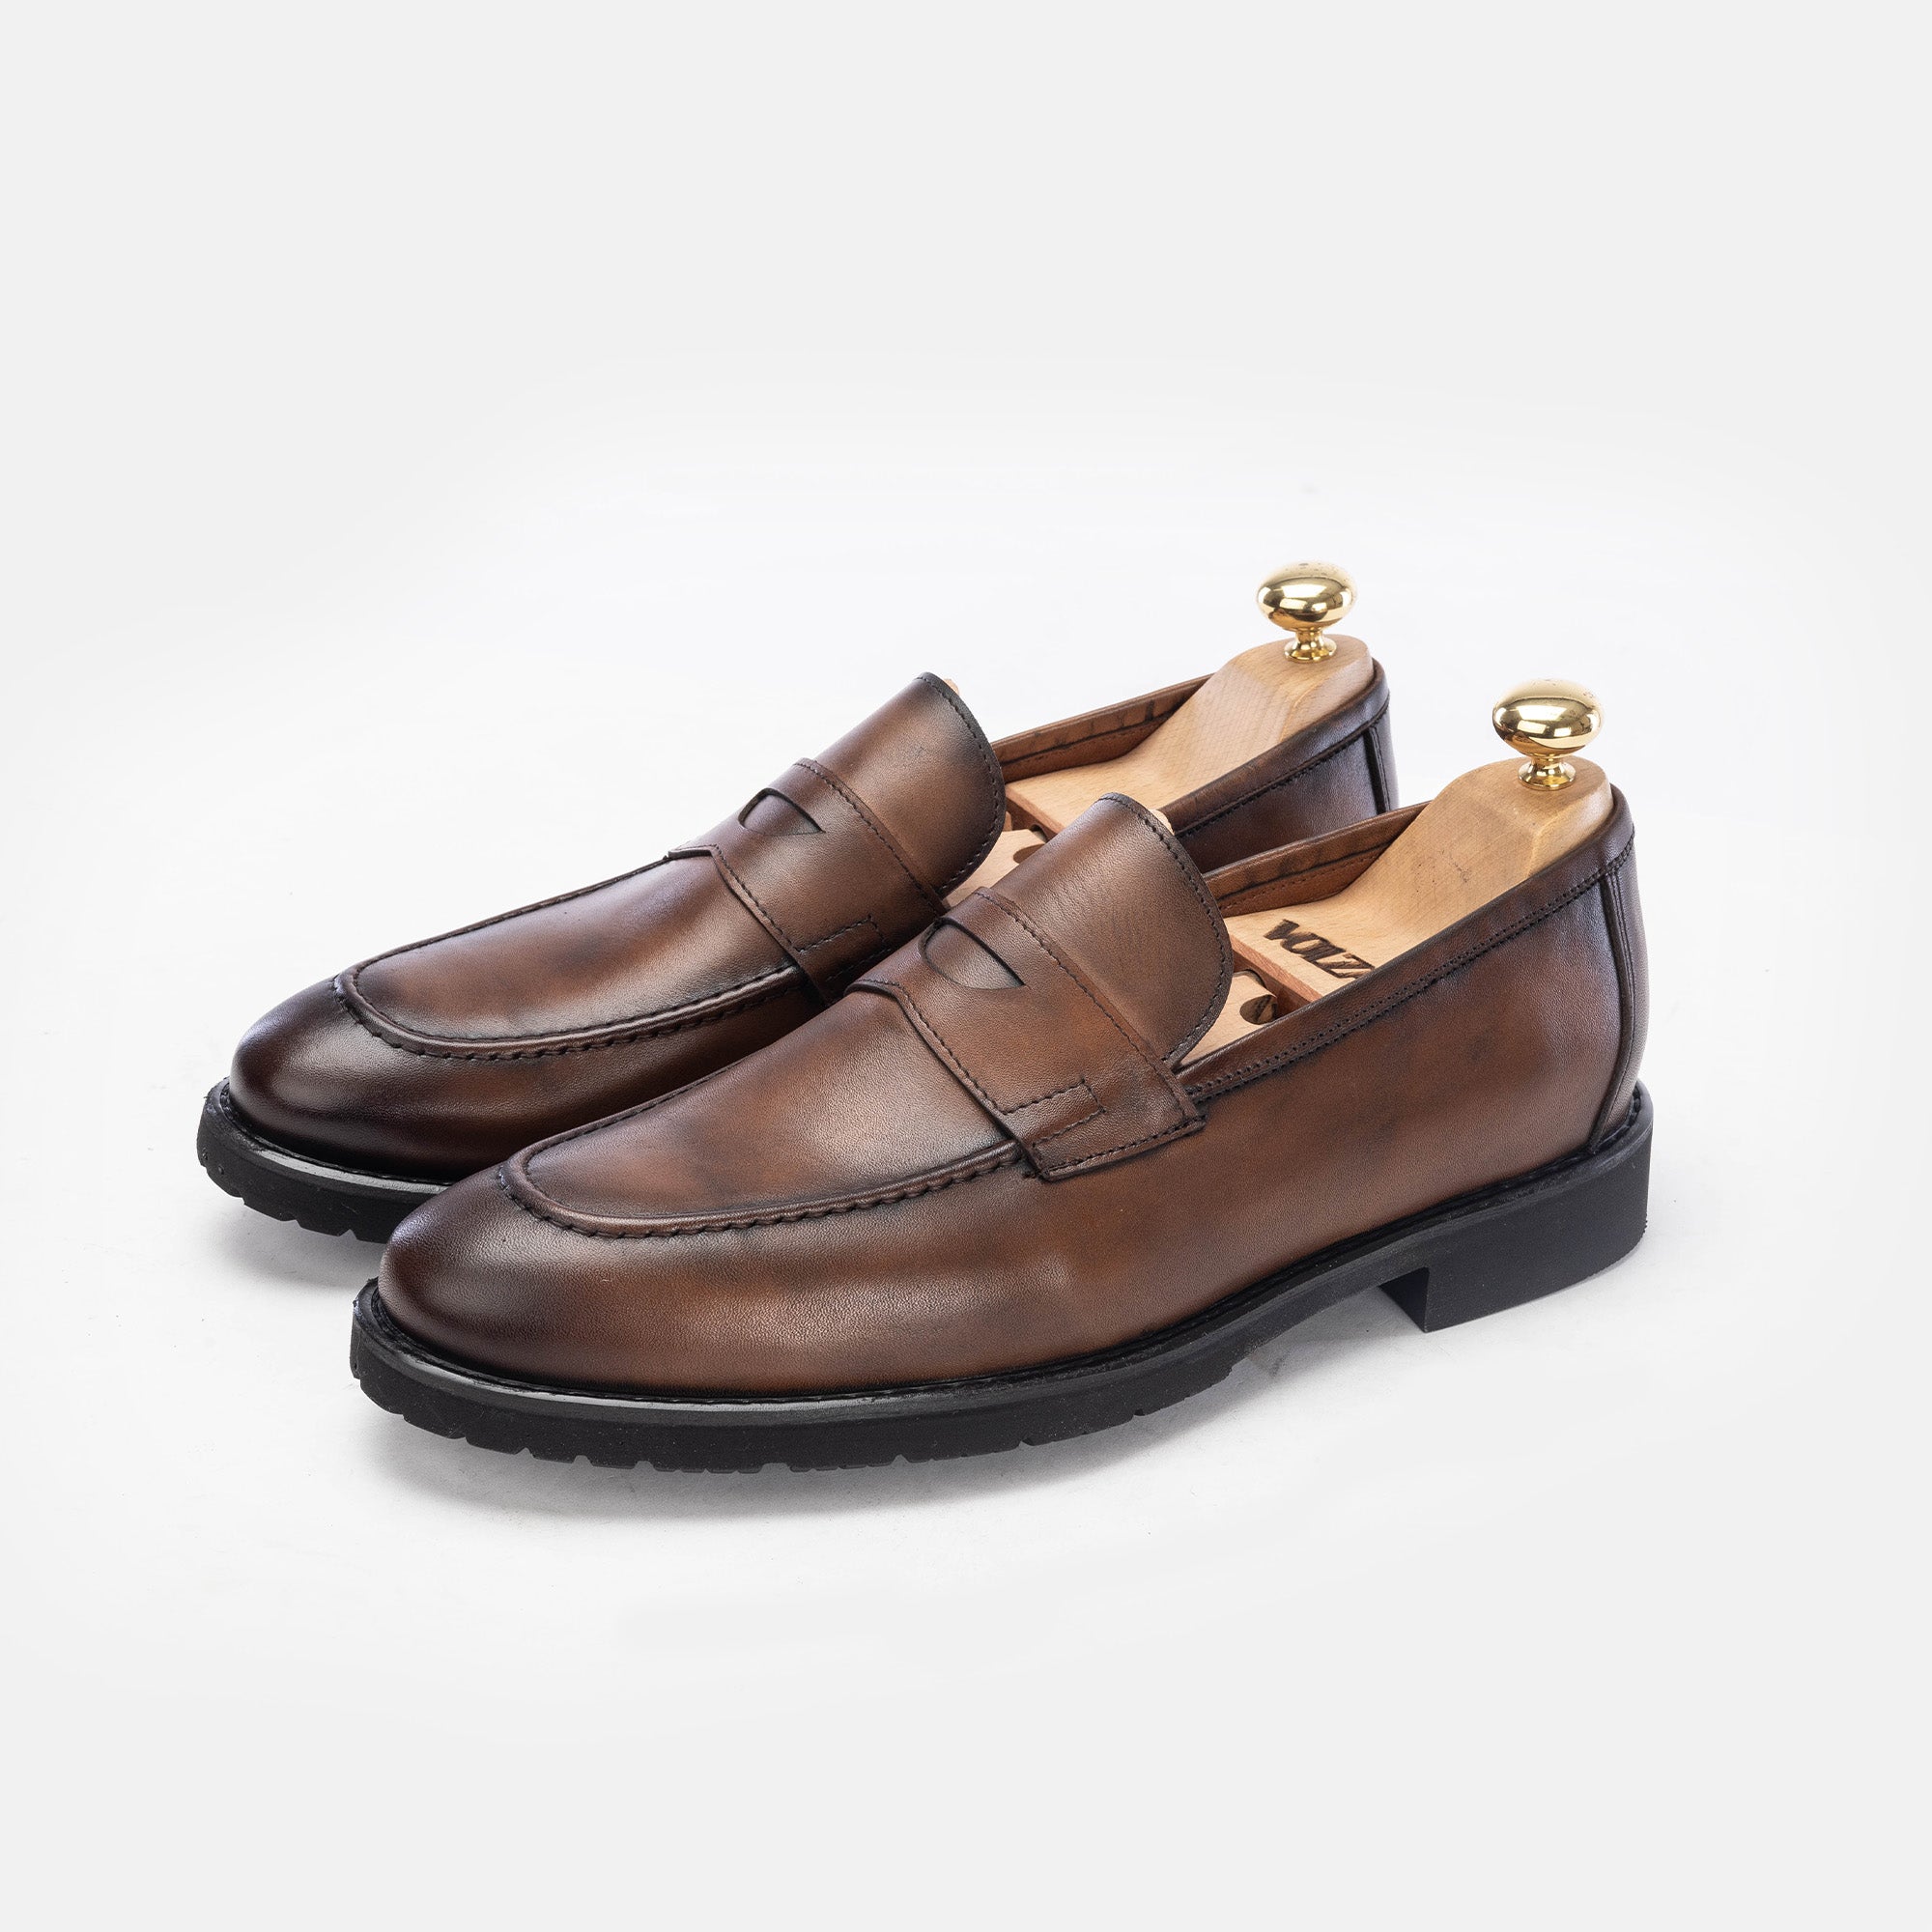 '5158 chaussure cuir marron vintage